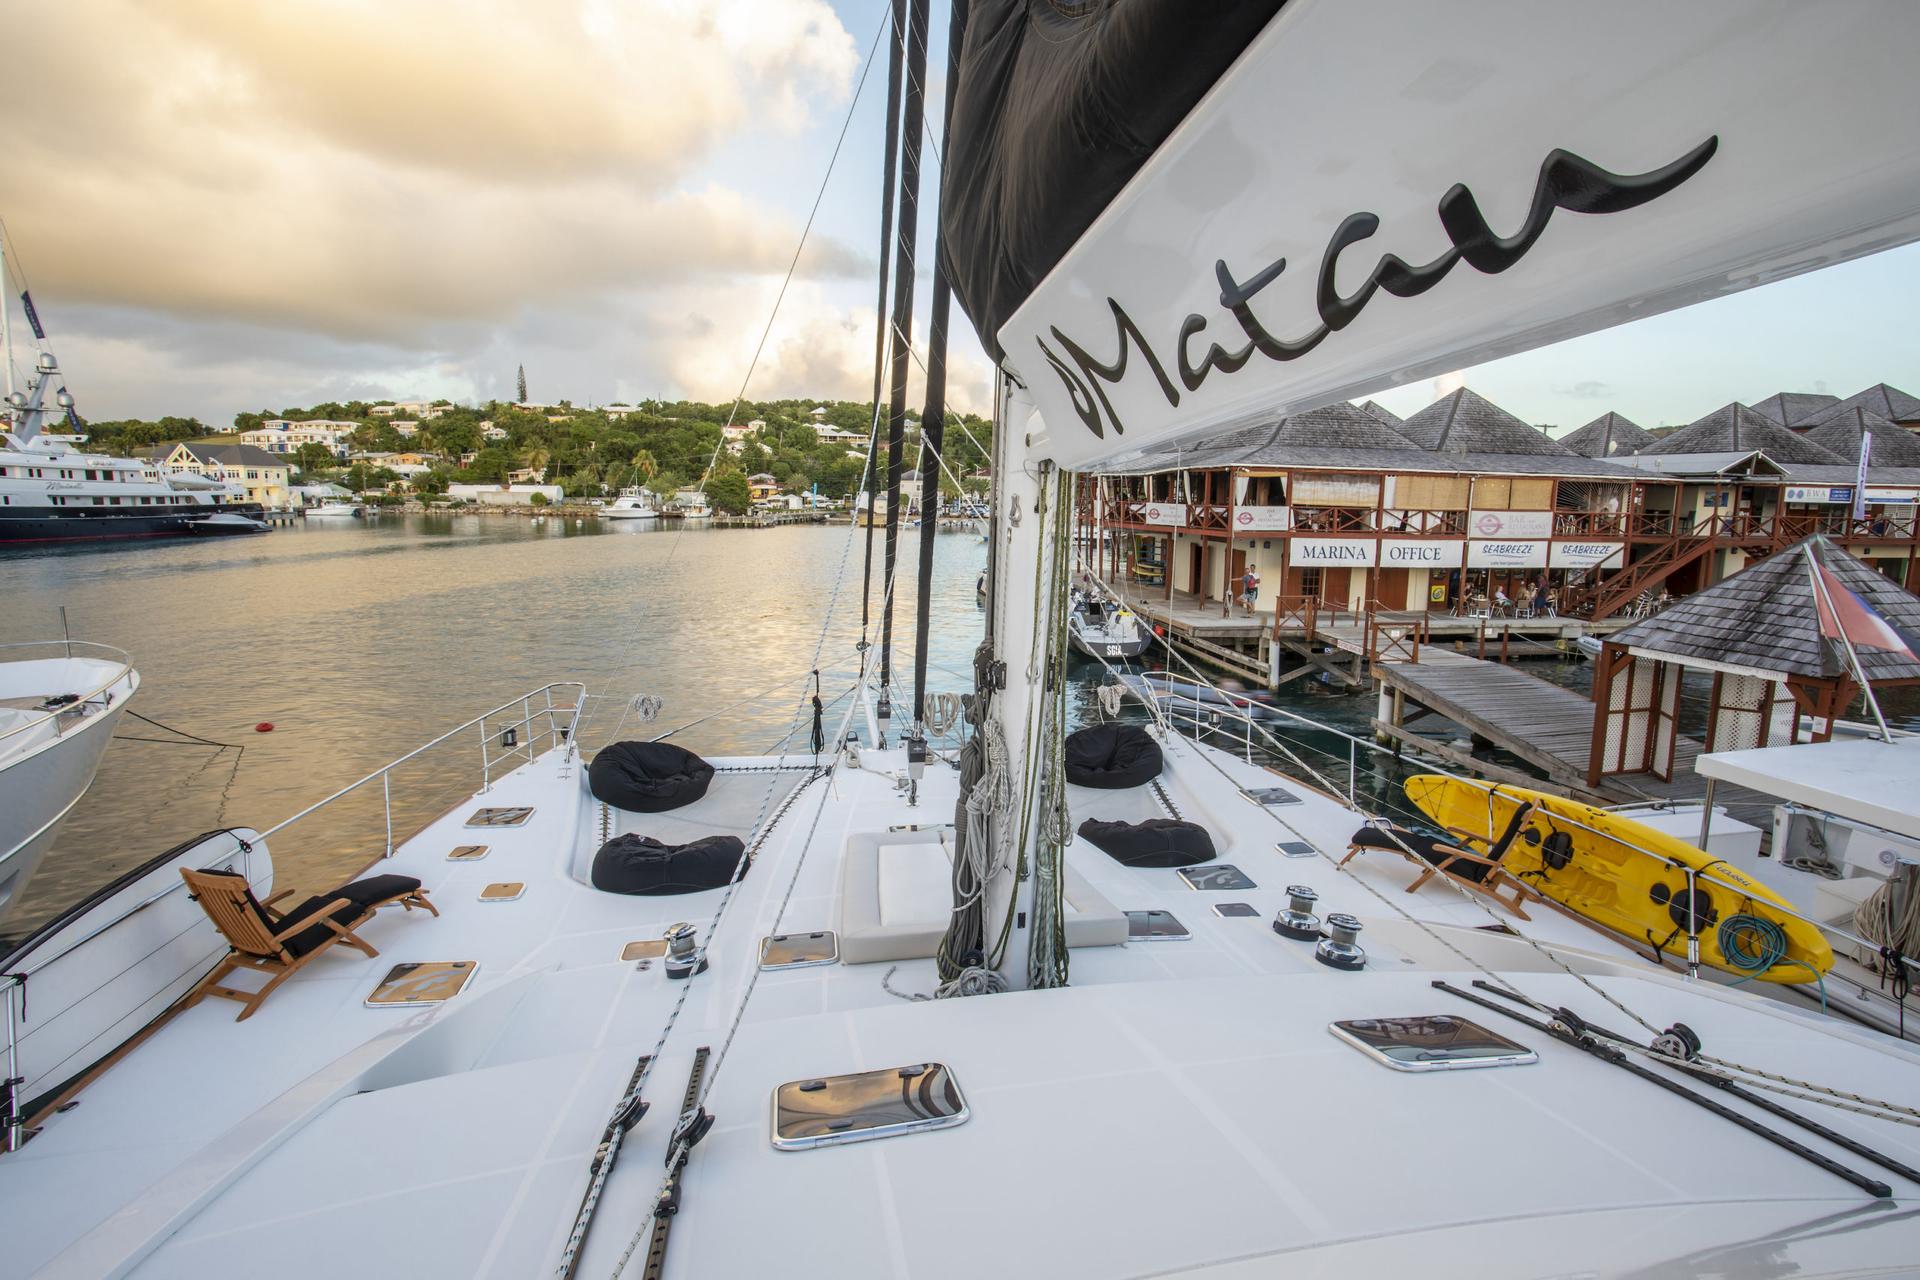 Catamaran Matau at the Antigua Charter Meeting